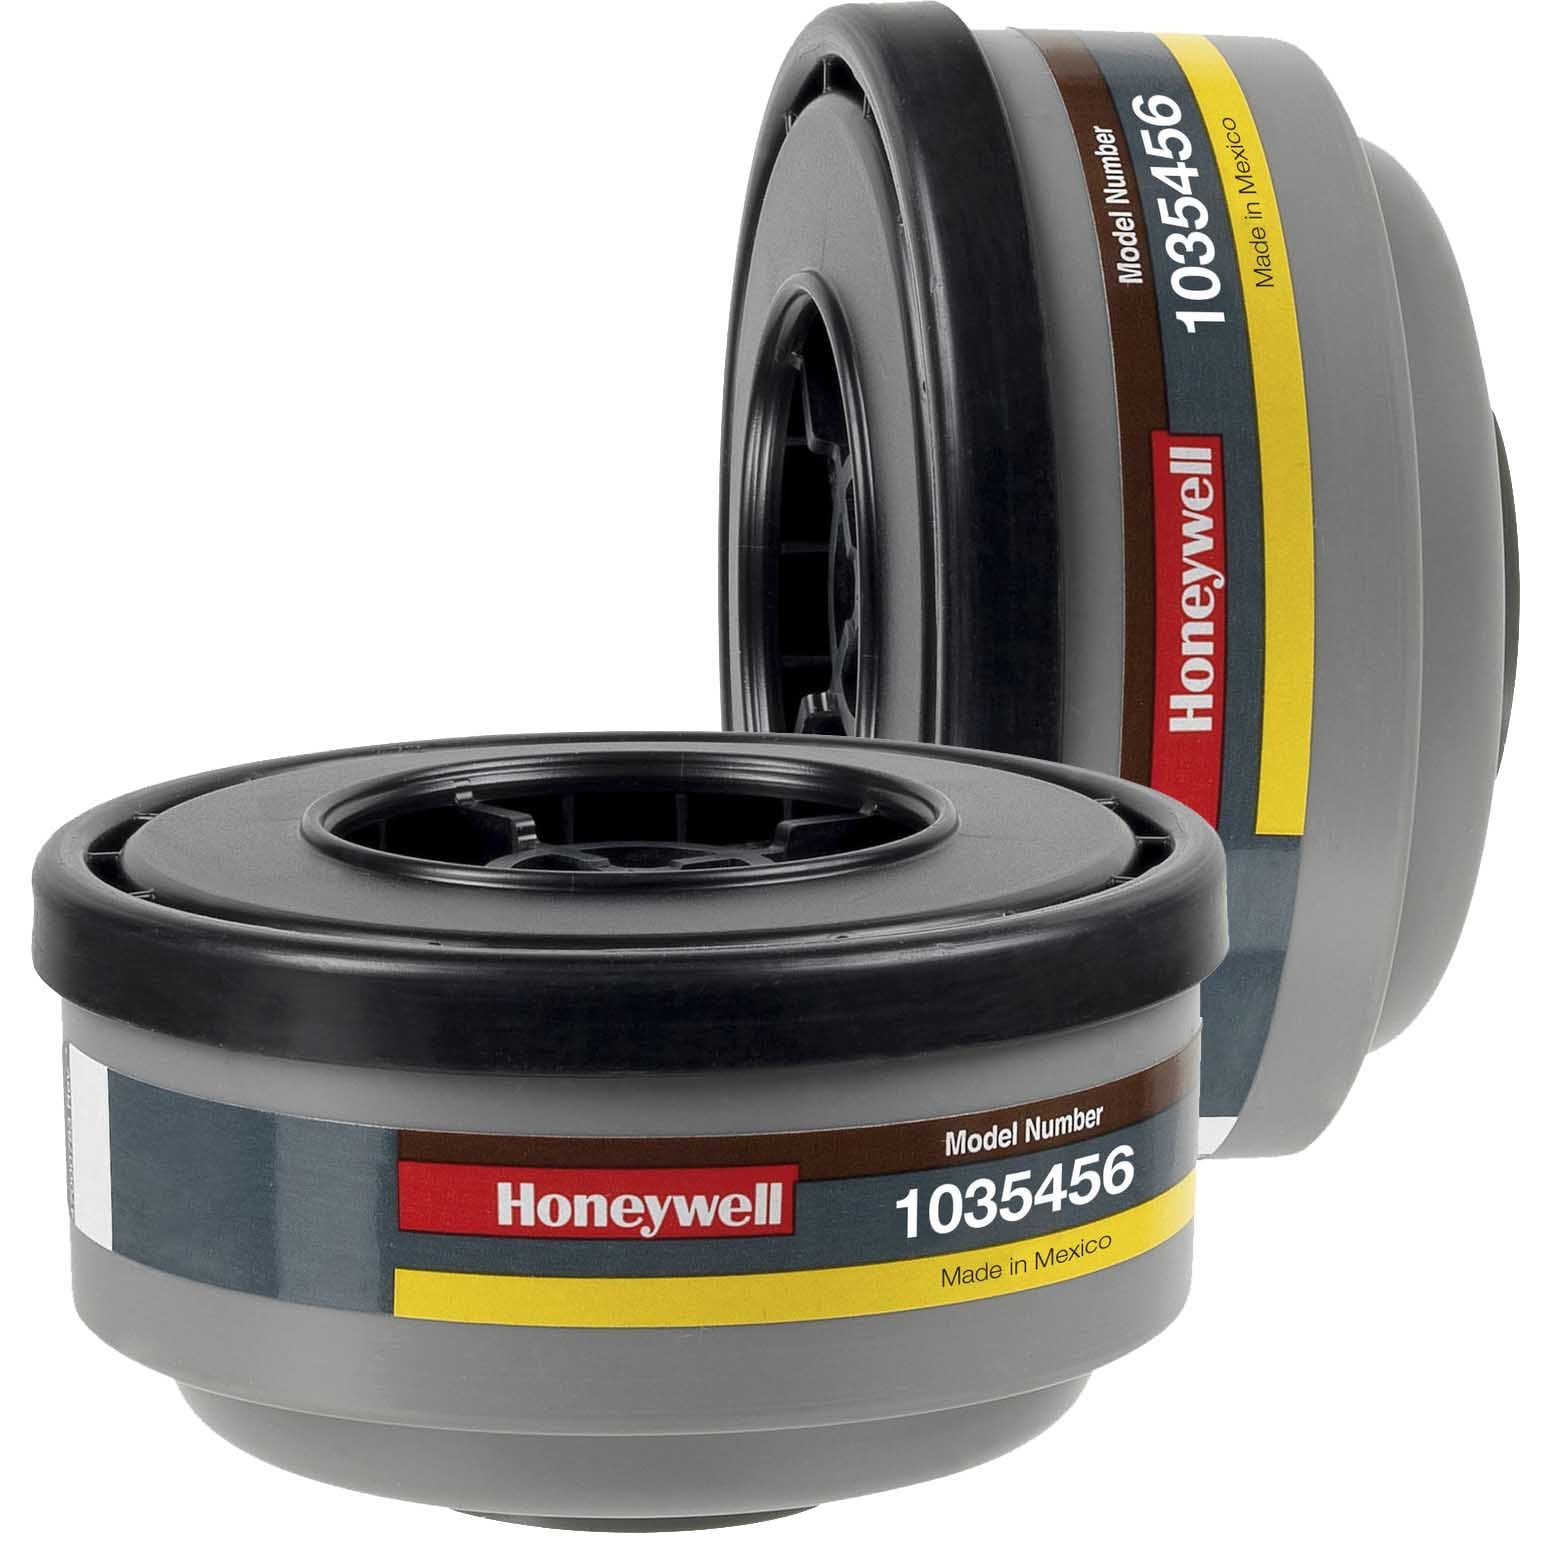 Honeywell-North 1035456 Bayonet A1B1E1 Filter Cartridge